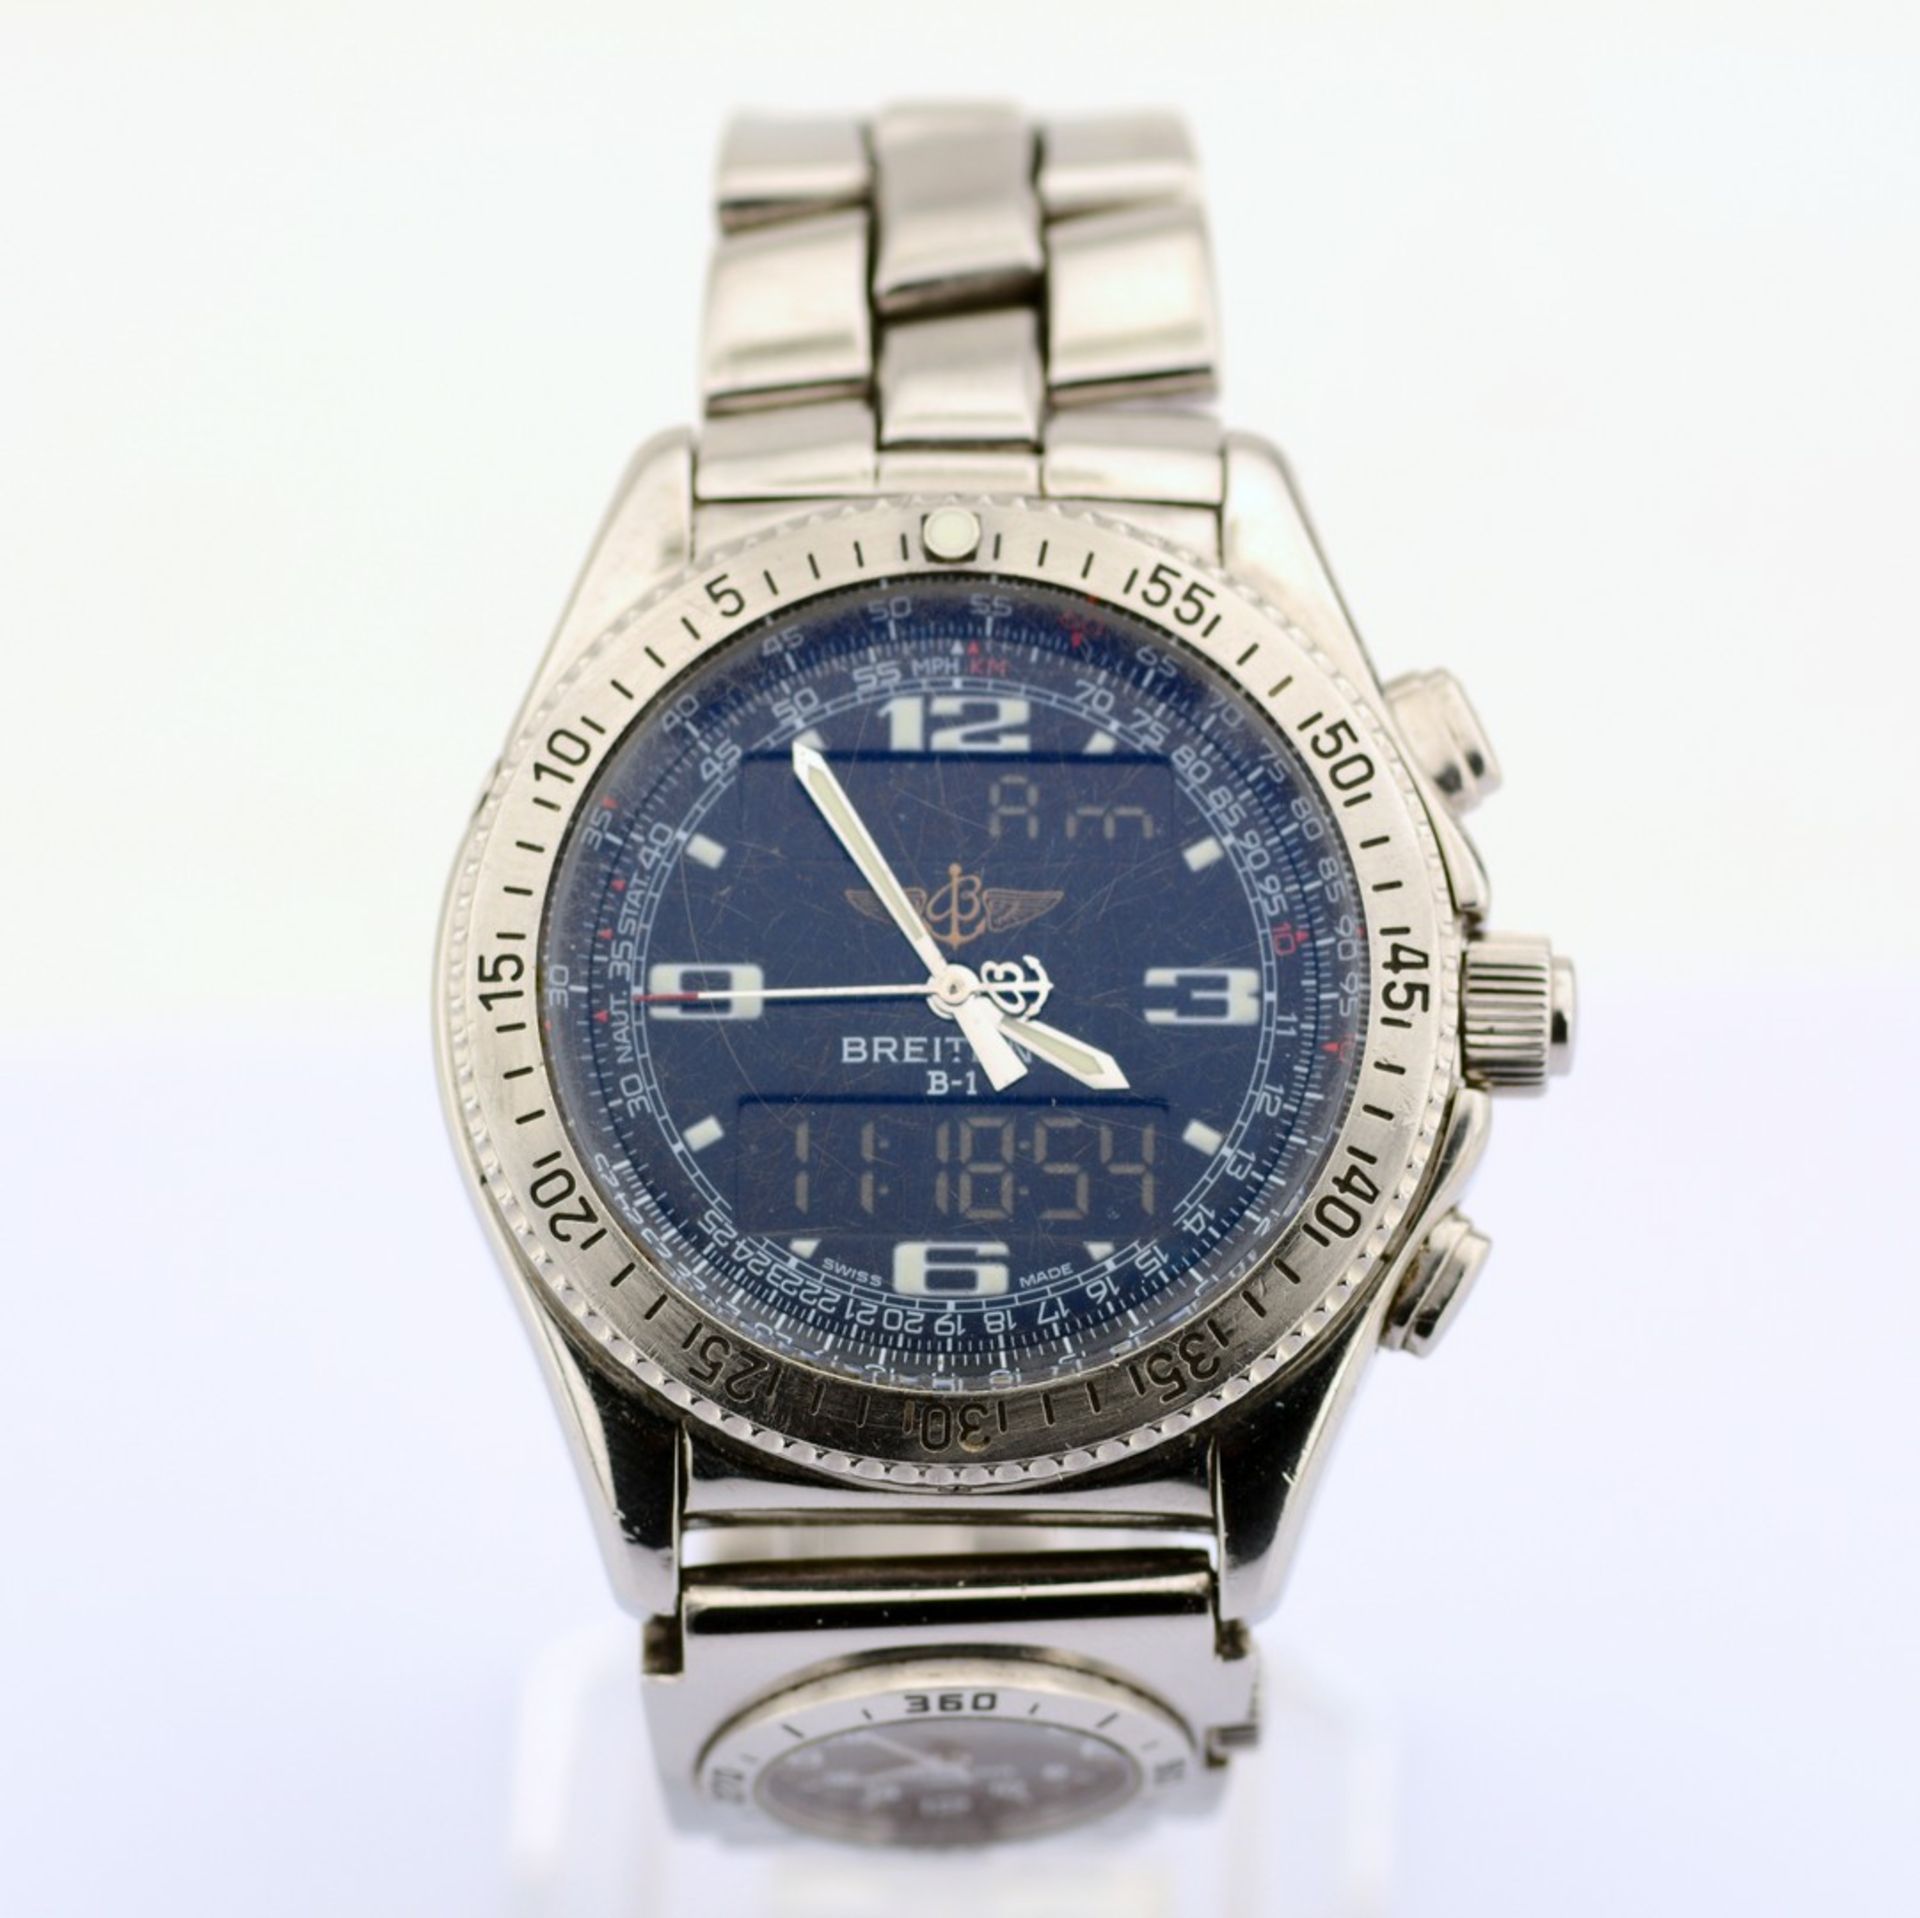 Breitling / A68362 B-1 With UTC Module - Gentlemen's Steel Wristwatch - Image 5 of 12